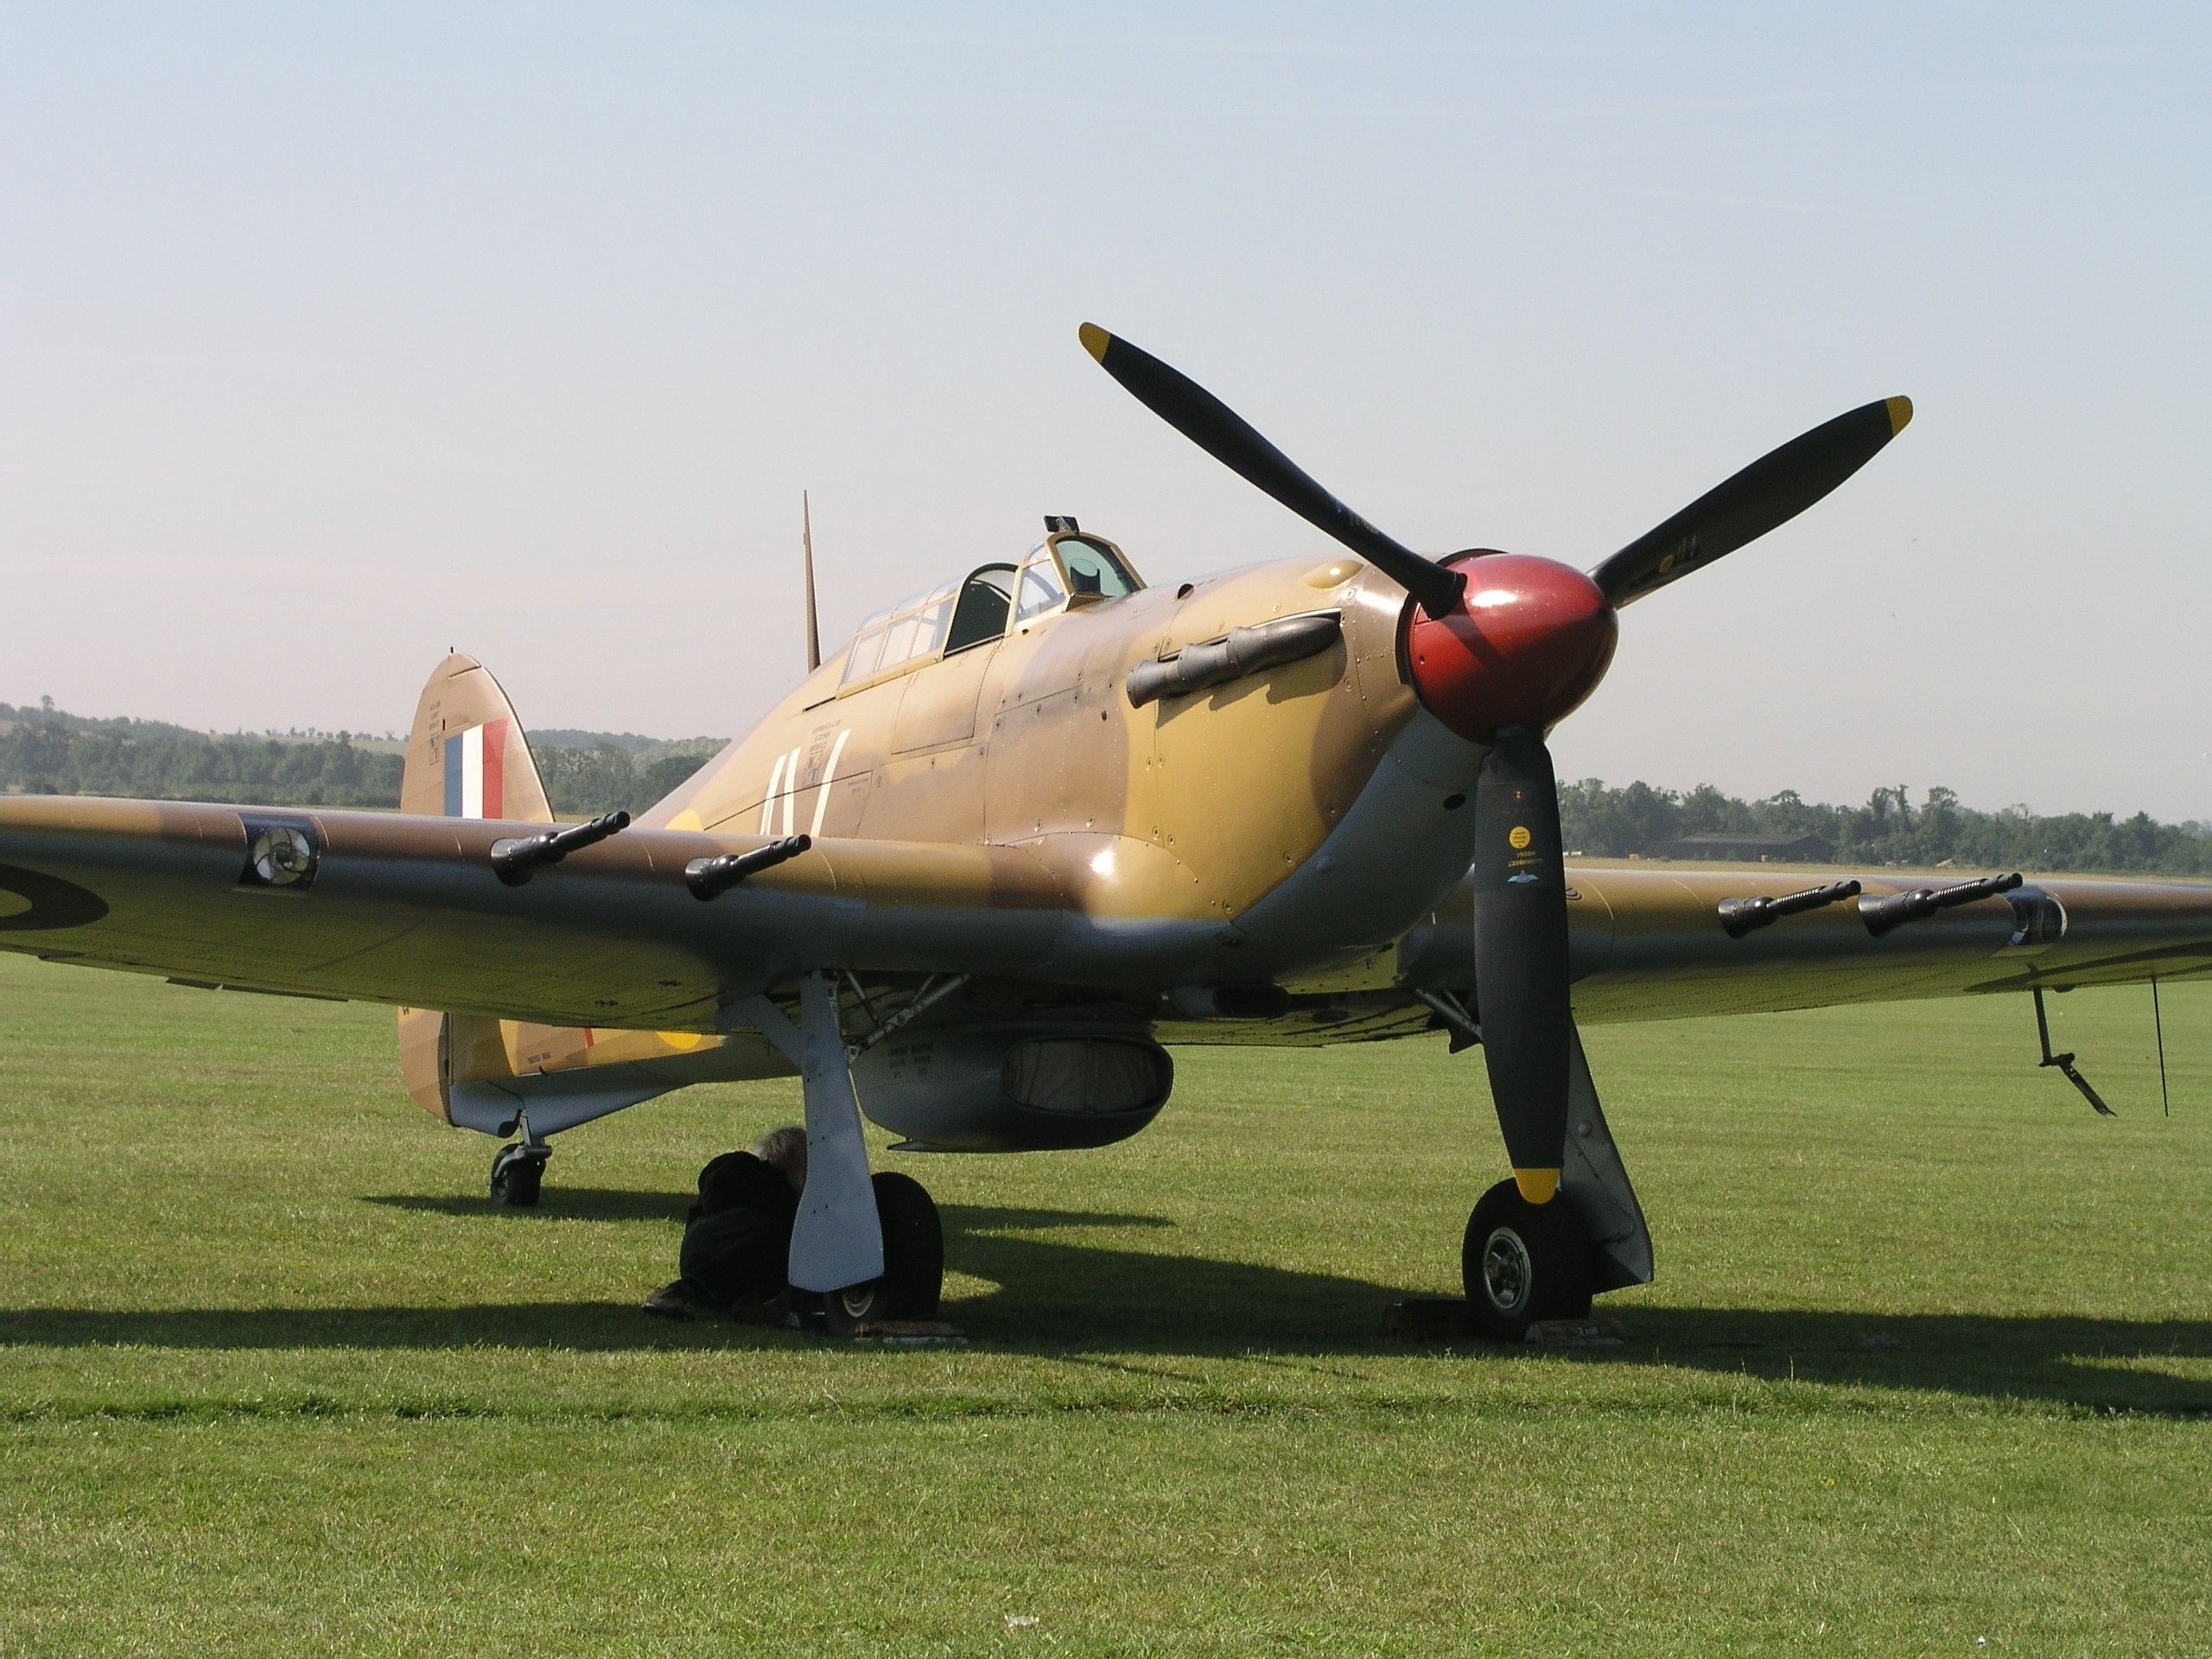 Hawker Hurricane idle in a field